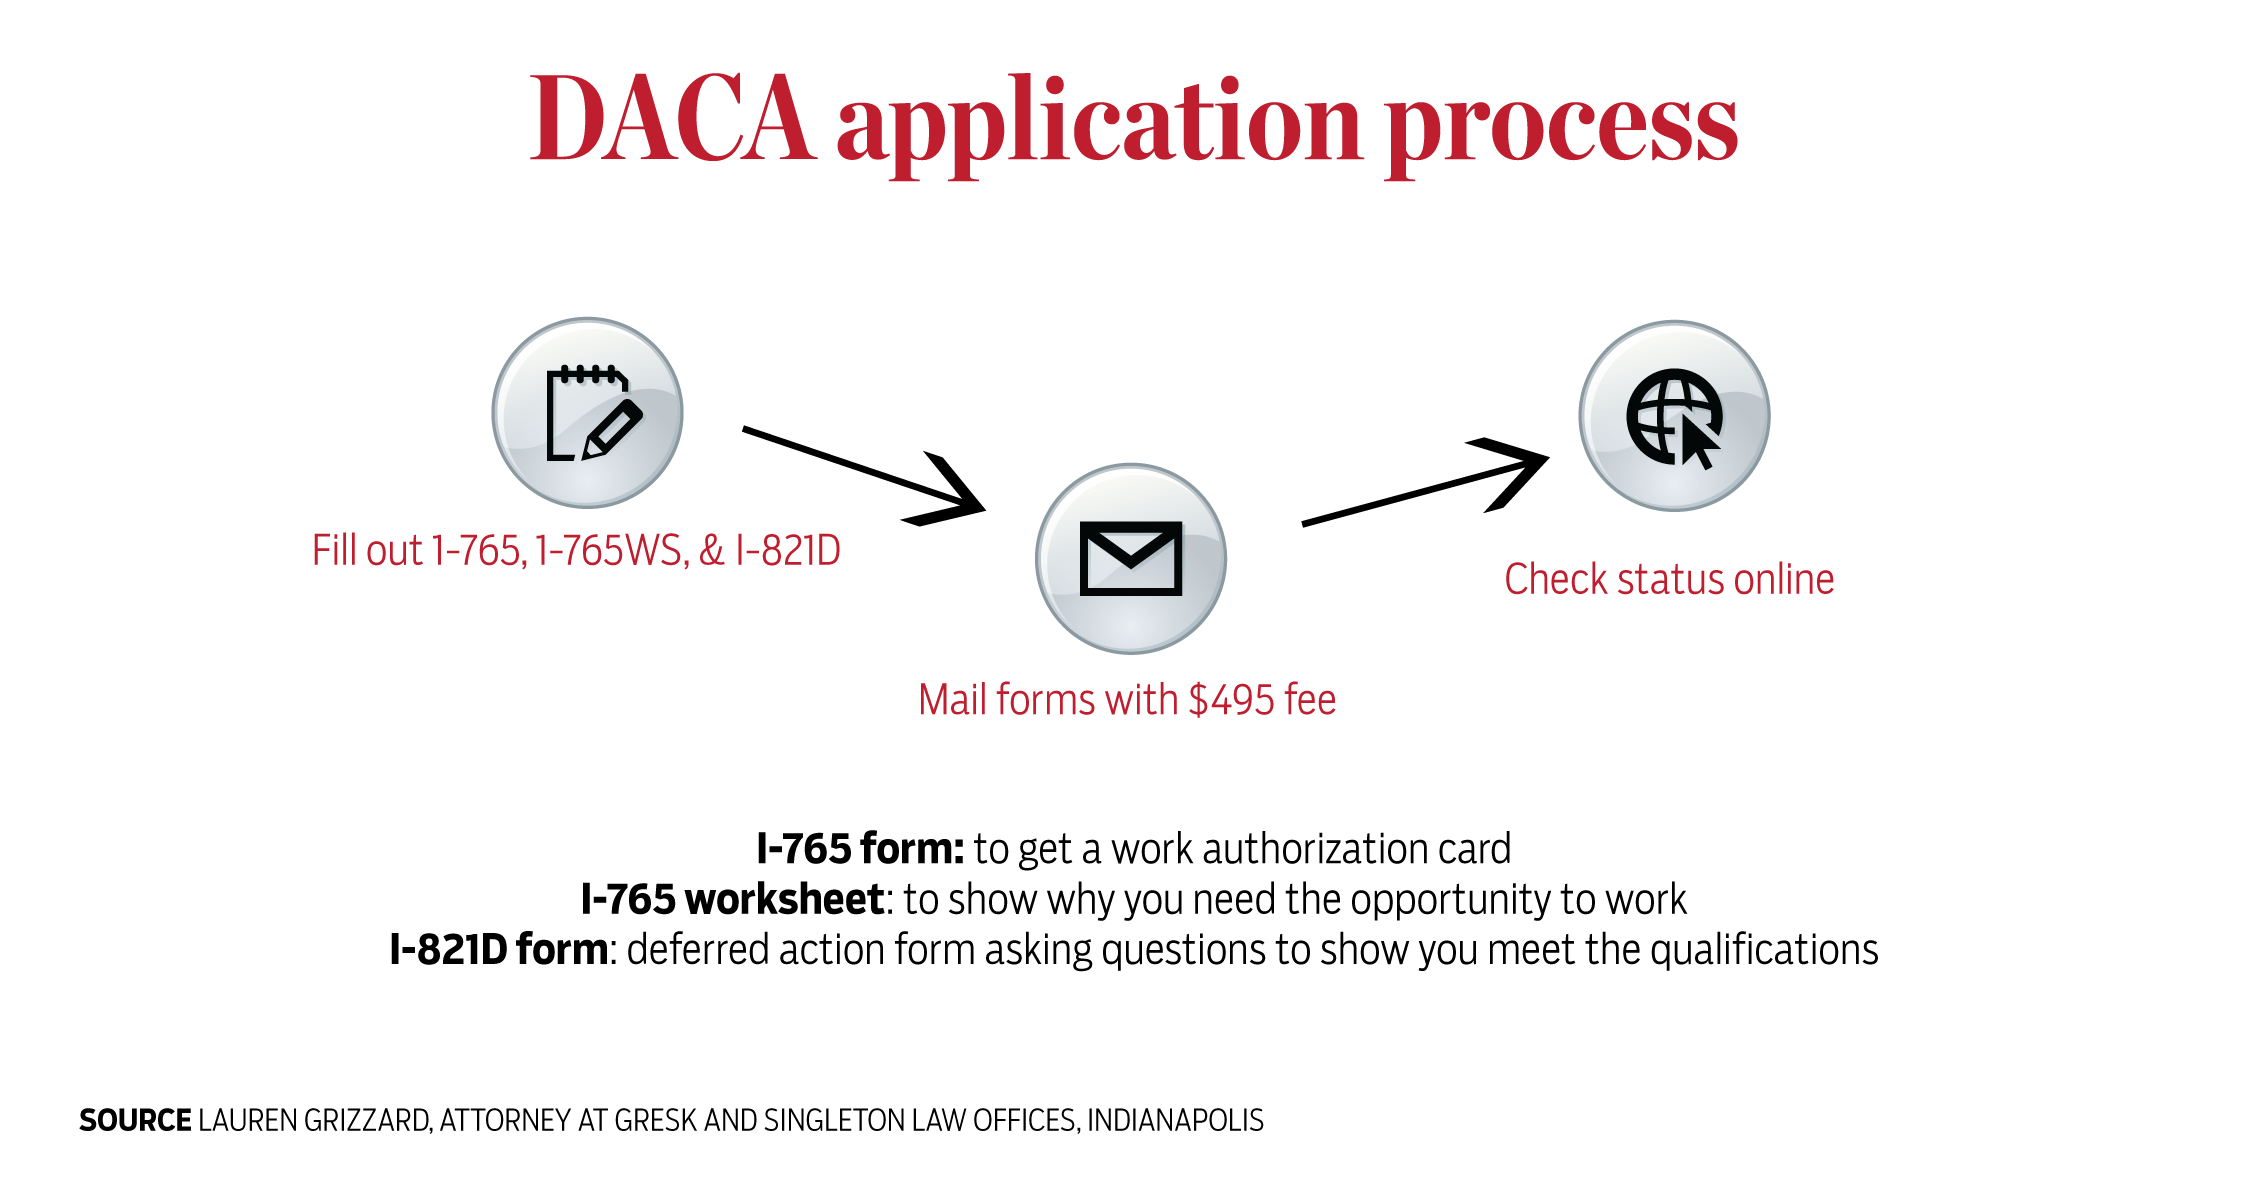 Image explaining the DACA application process